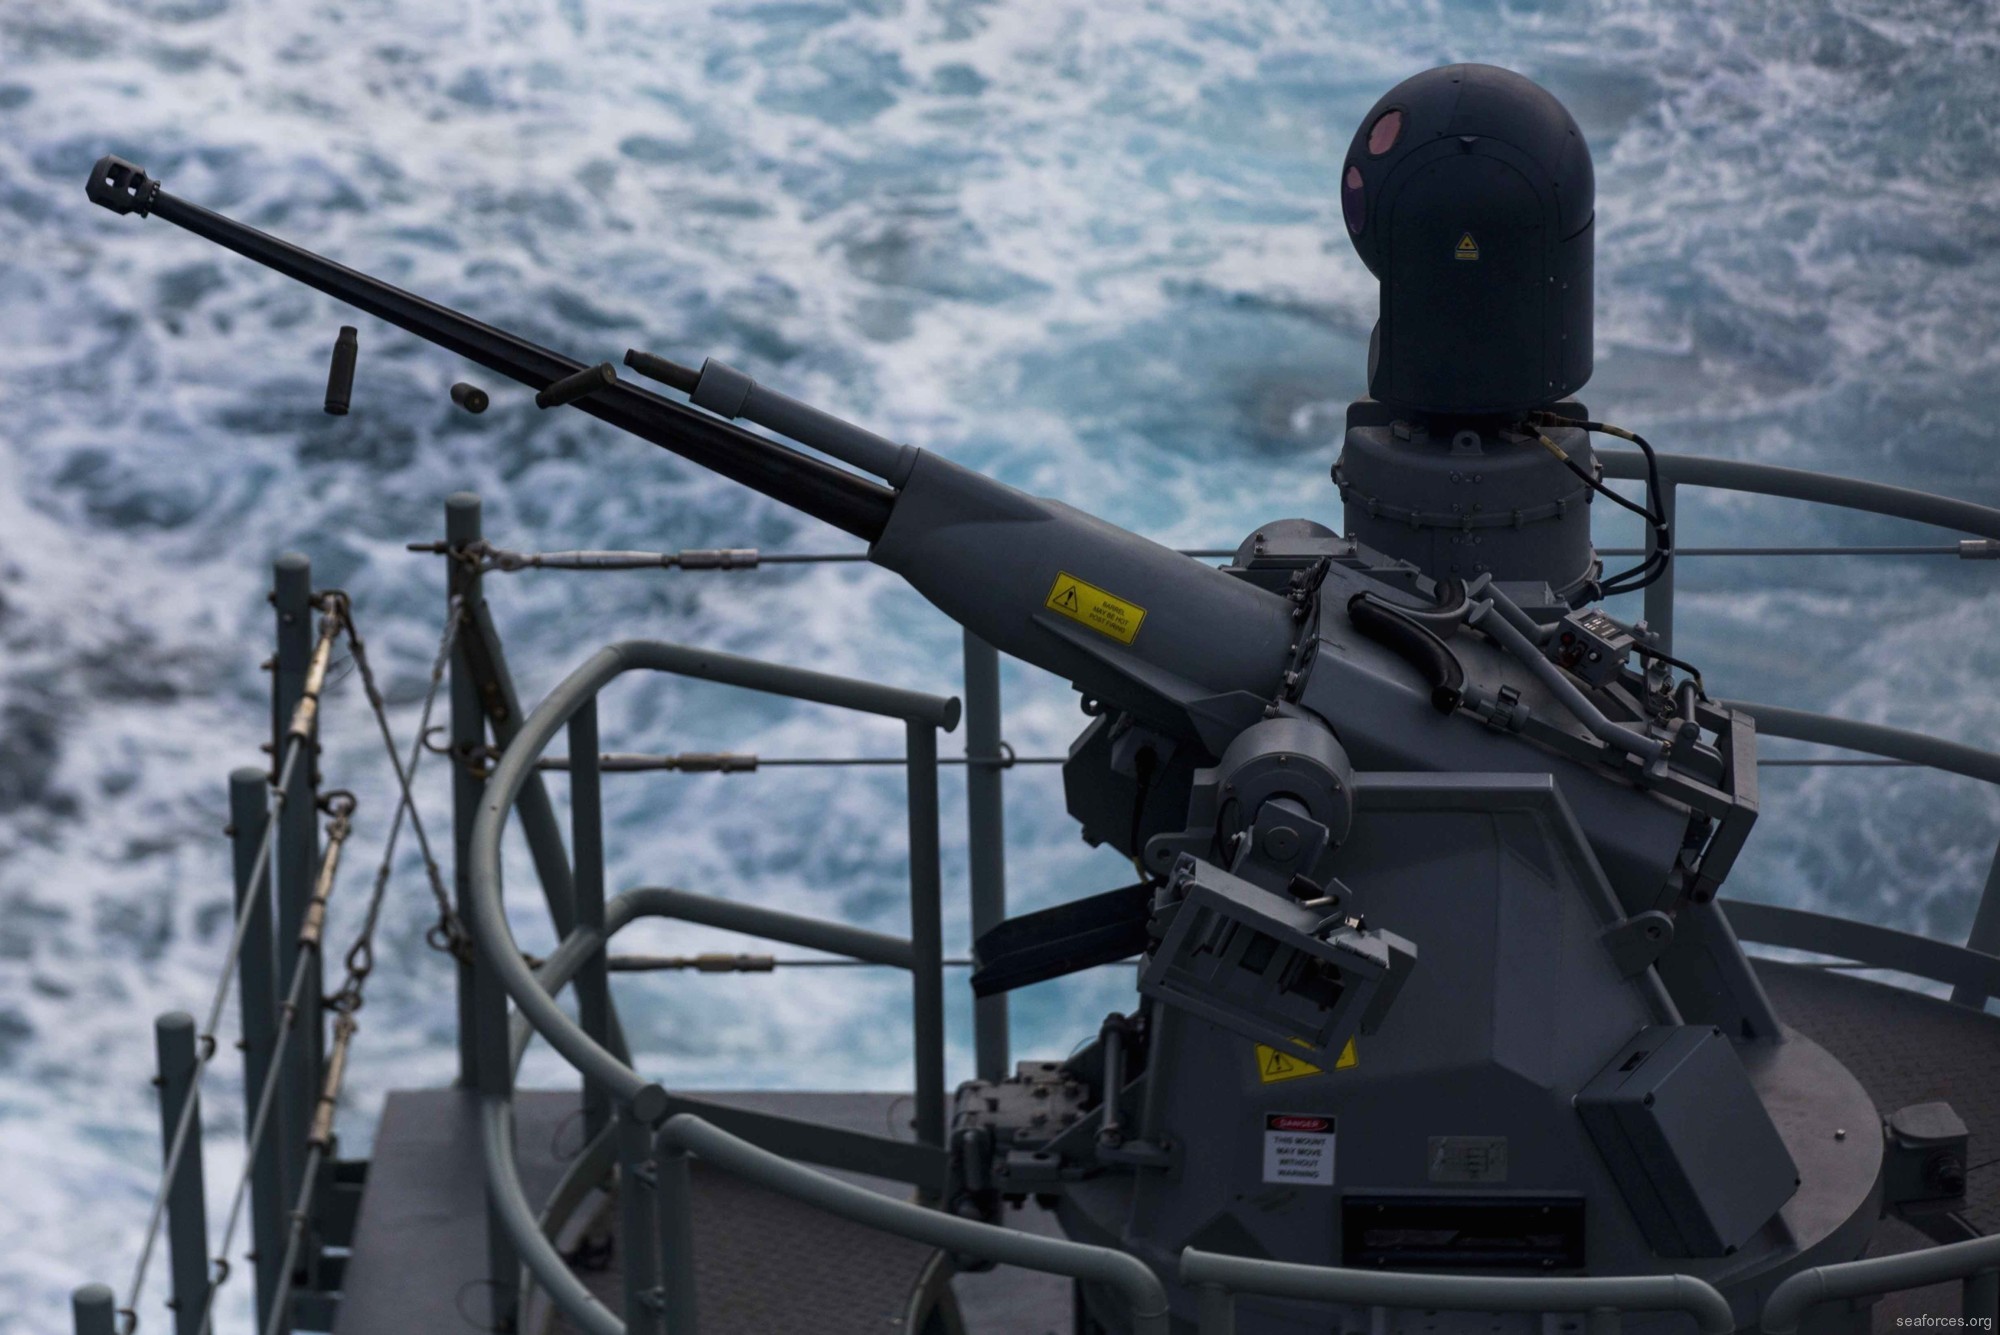 hmas adelaide l-01 amphibious landing ship helicopter dock lhd australian navy 09 rafael typhoon 25mm gun